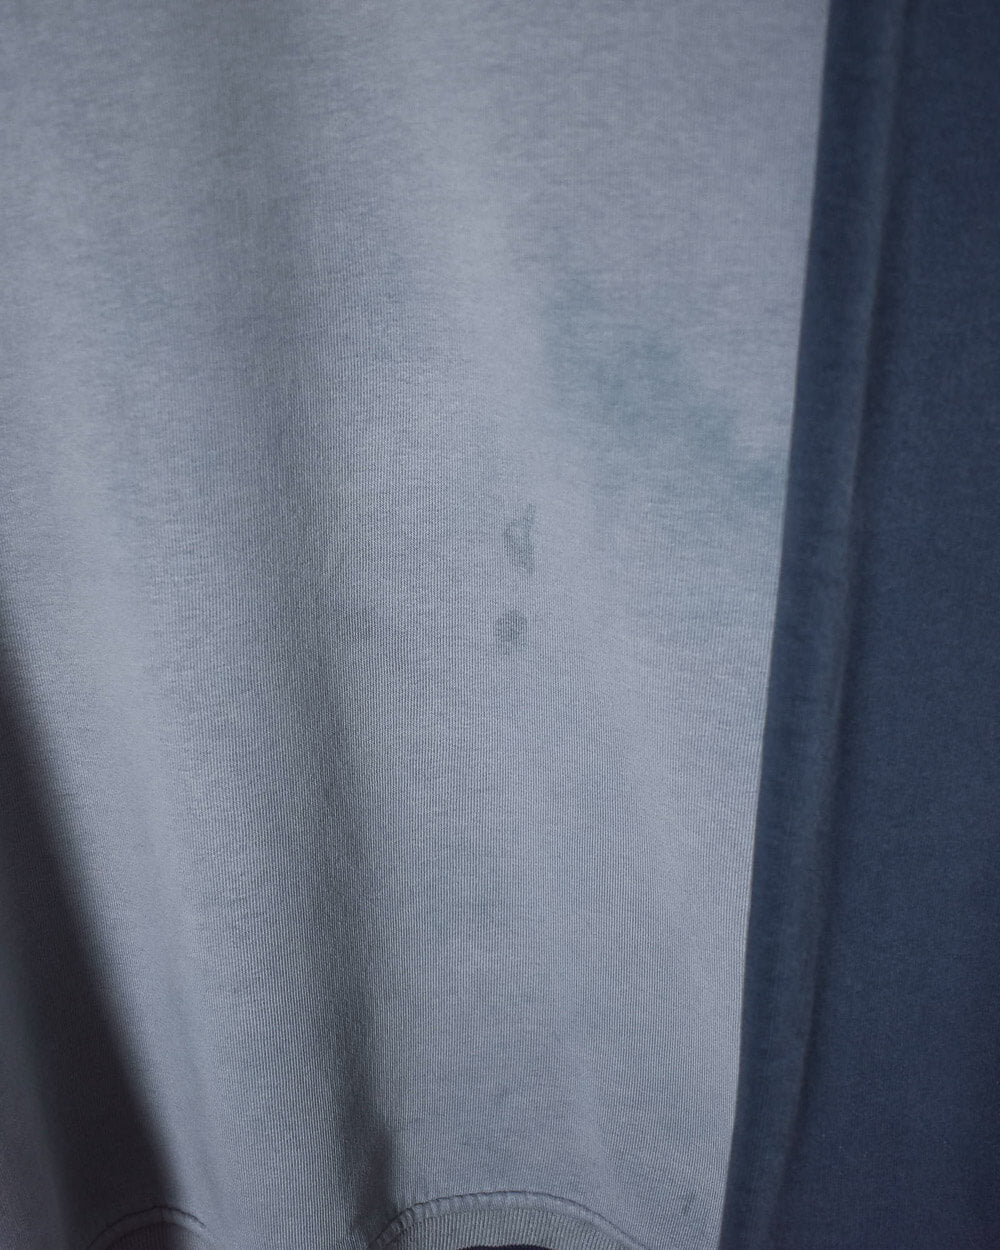 Grey Adidas Sweatshirt - Medium